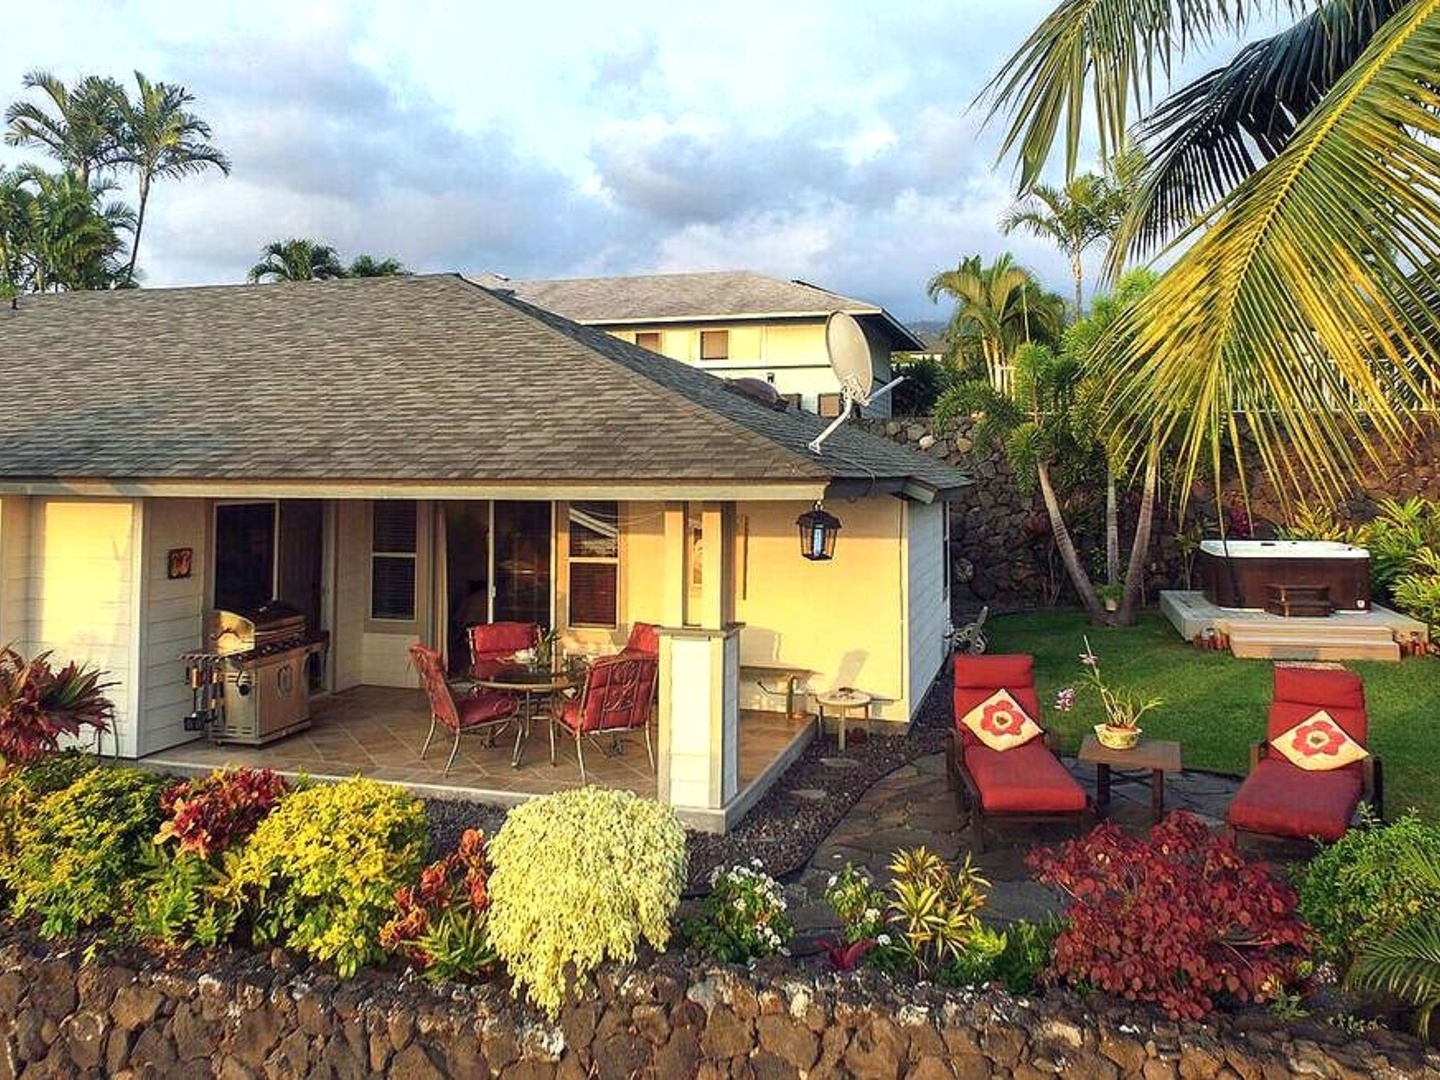 Kailua Kona Vacation Rentals, Hale Alaula - Ocean View - Spacious lanai with gorgeous golden sunlight.